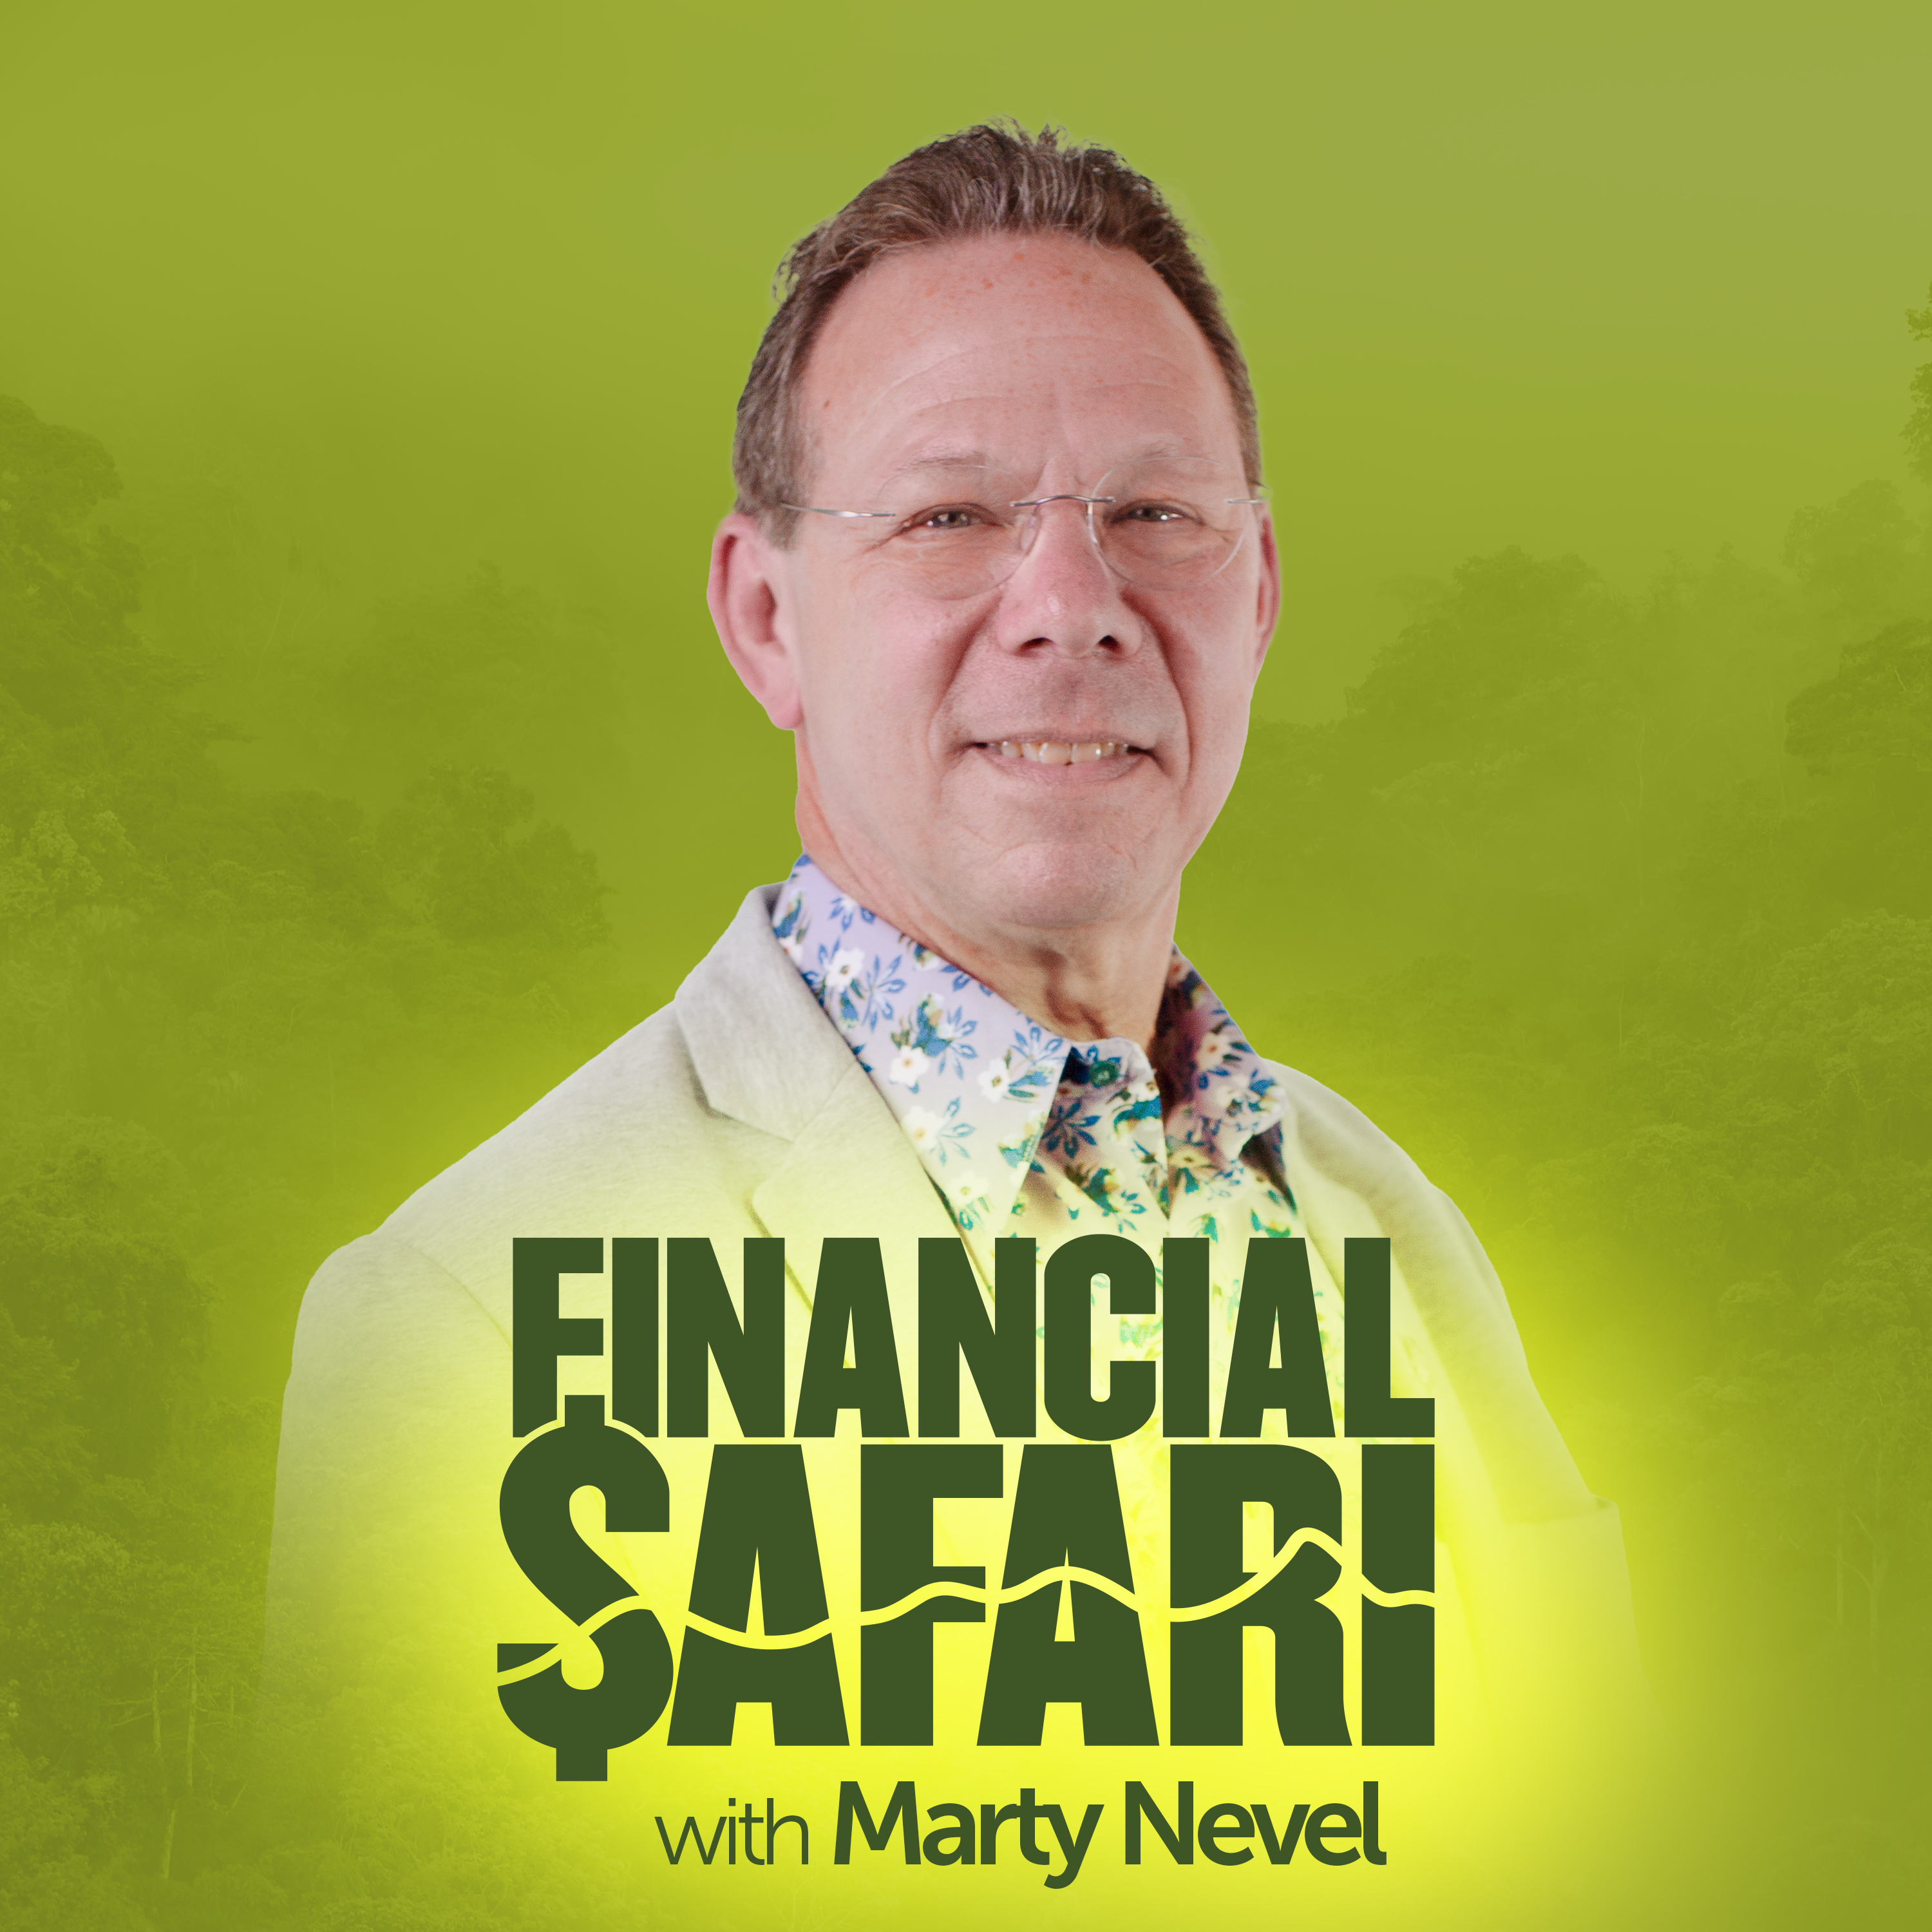 Financial Safari with Marty Nevel